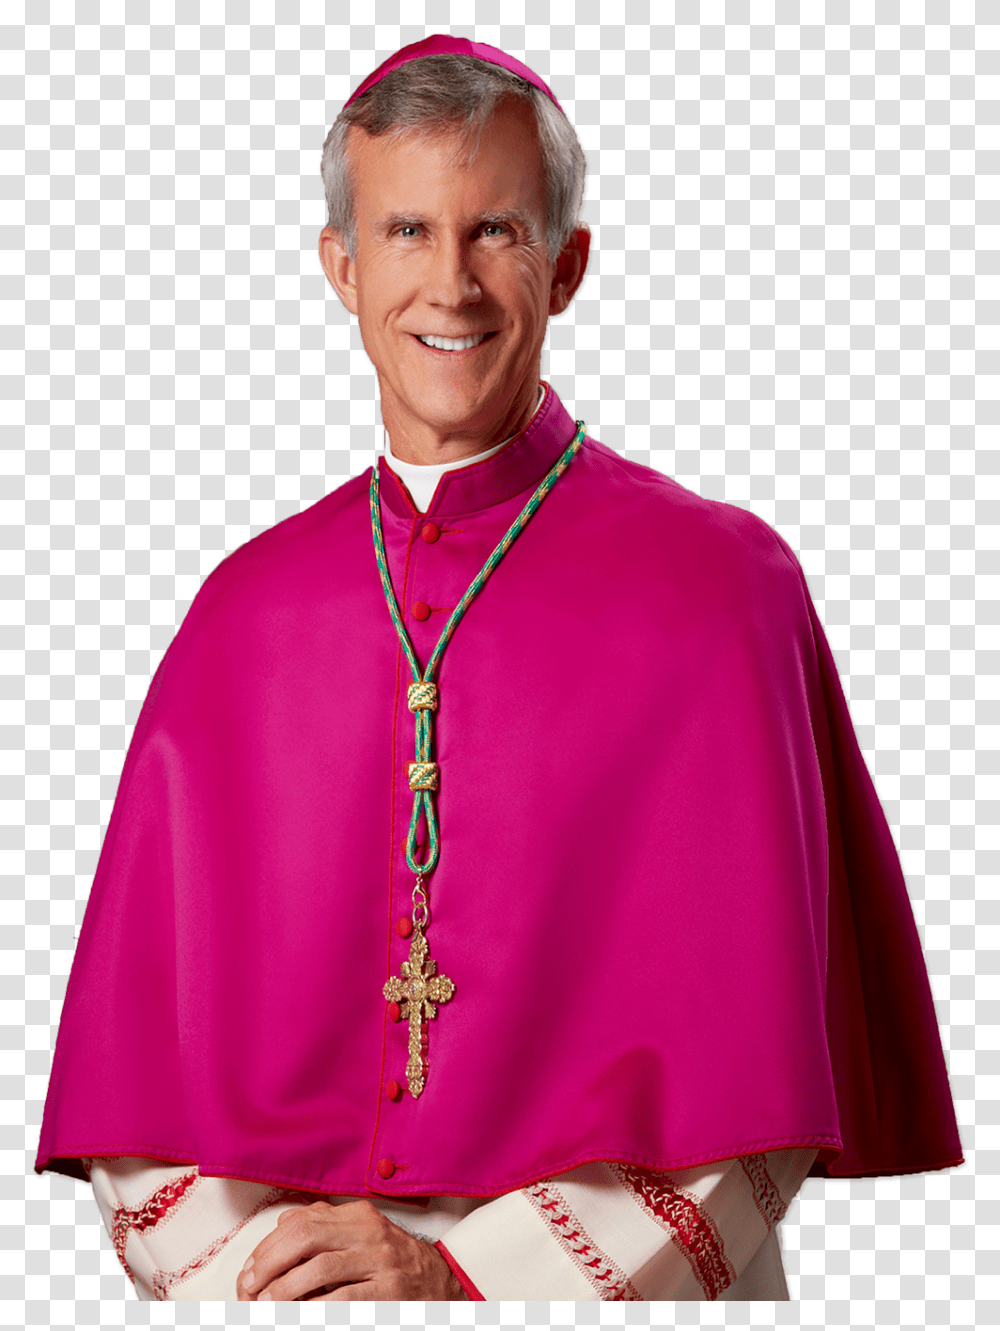 Bishop Strickland, Priest, Person, Human, Necklace Transparent Png